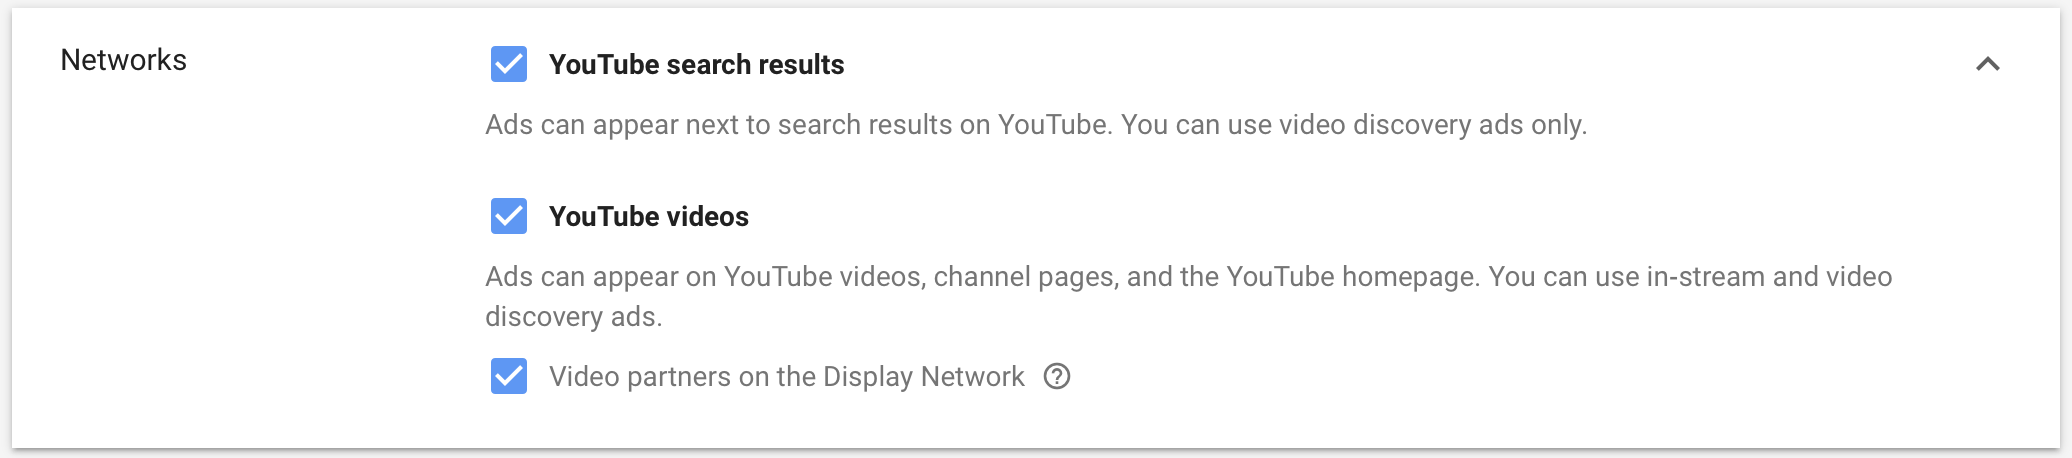 YouTube Network Selection